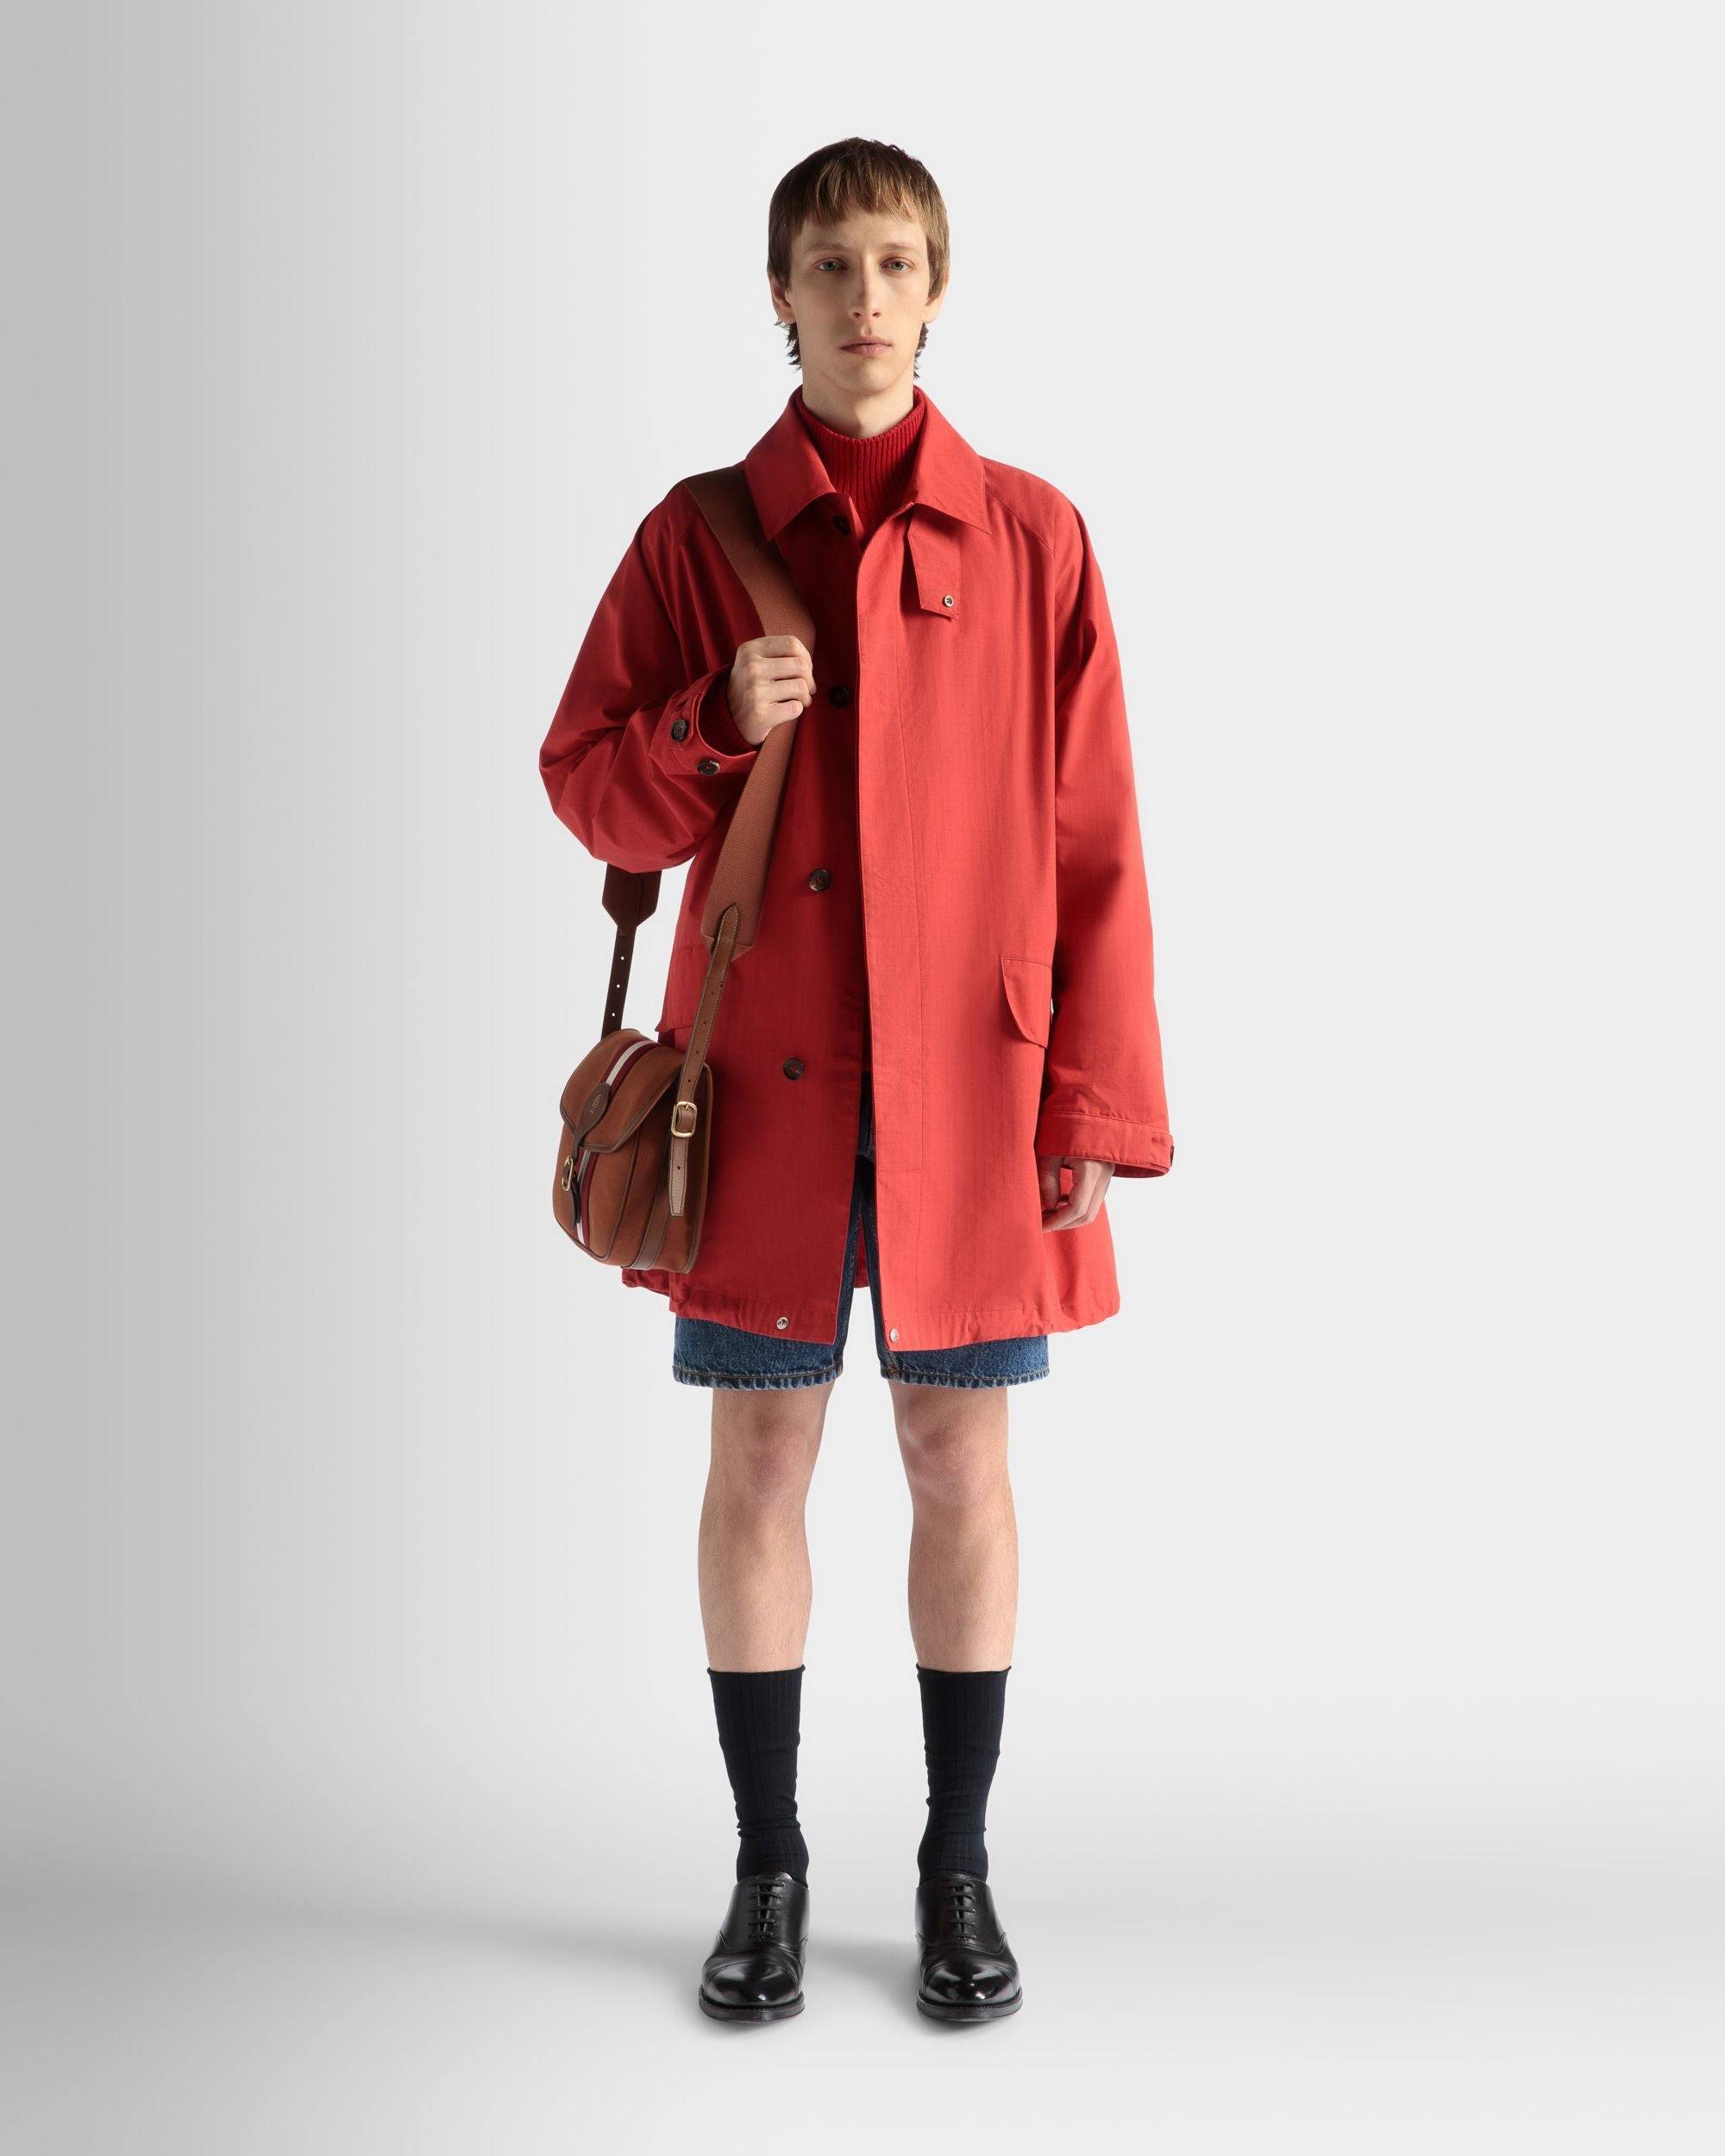 Coat in Candy Red Nylon - Men's - Bally - 02